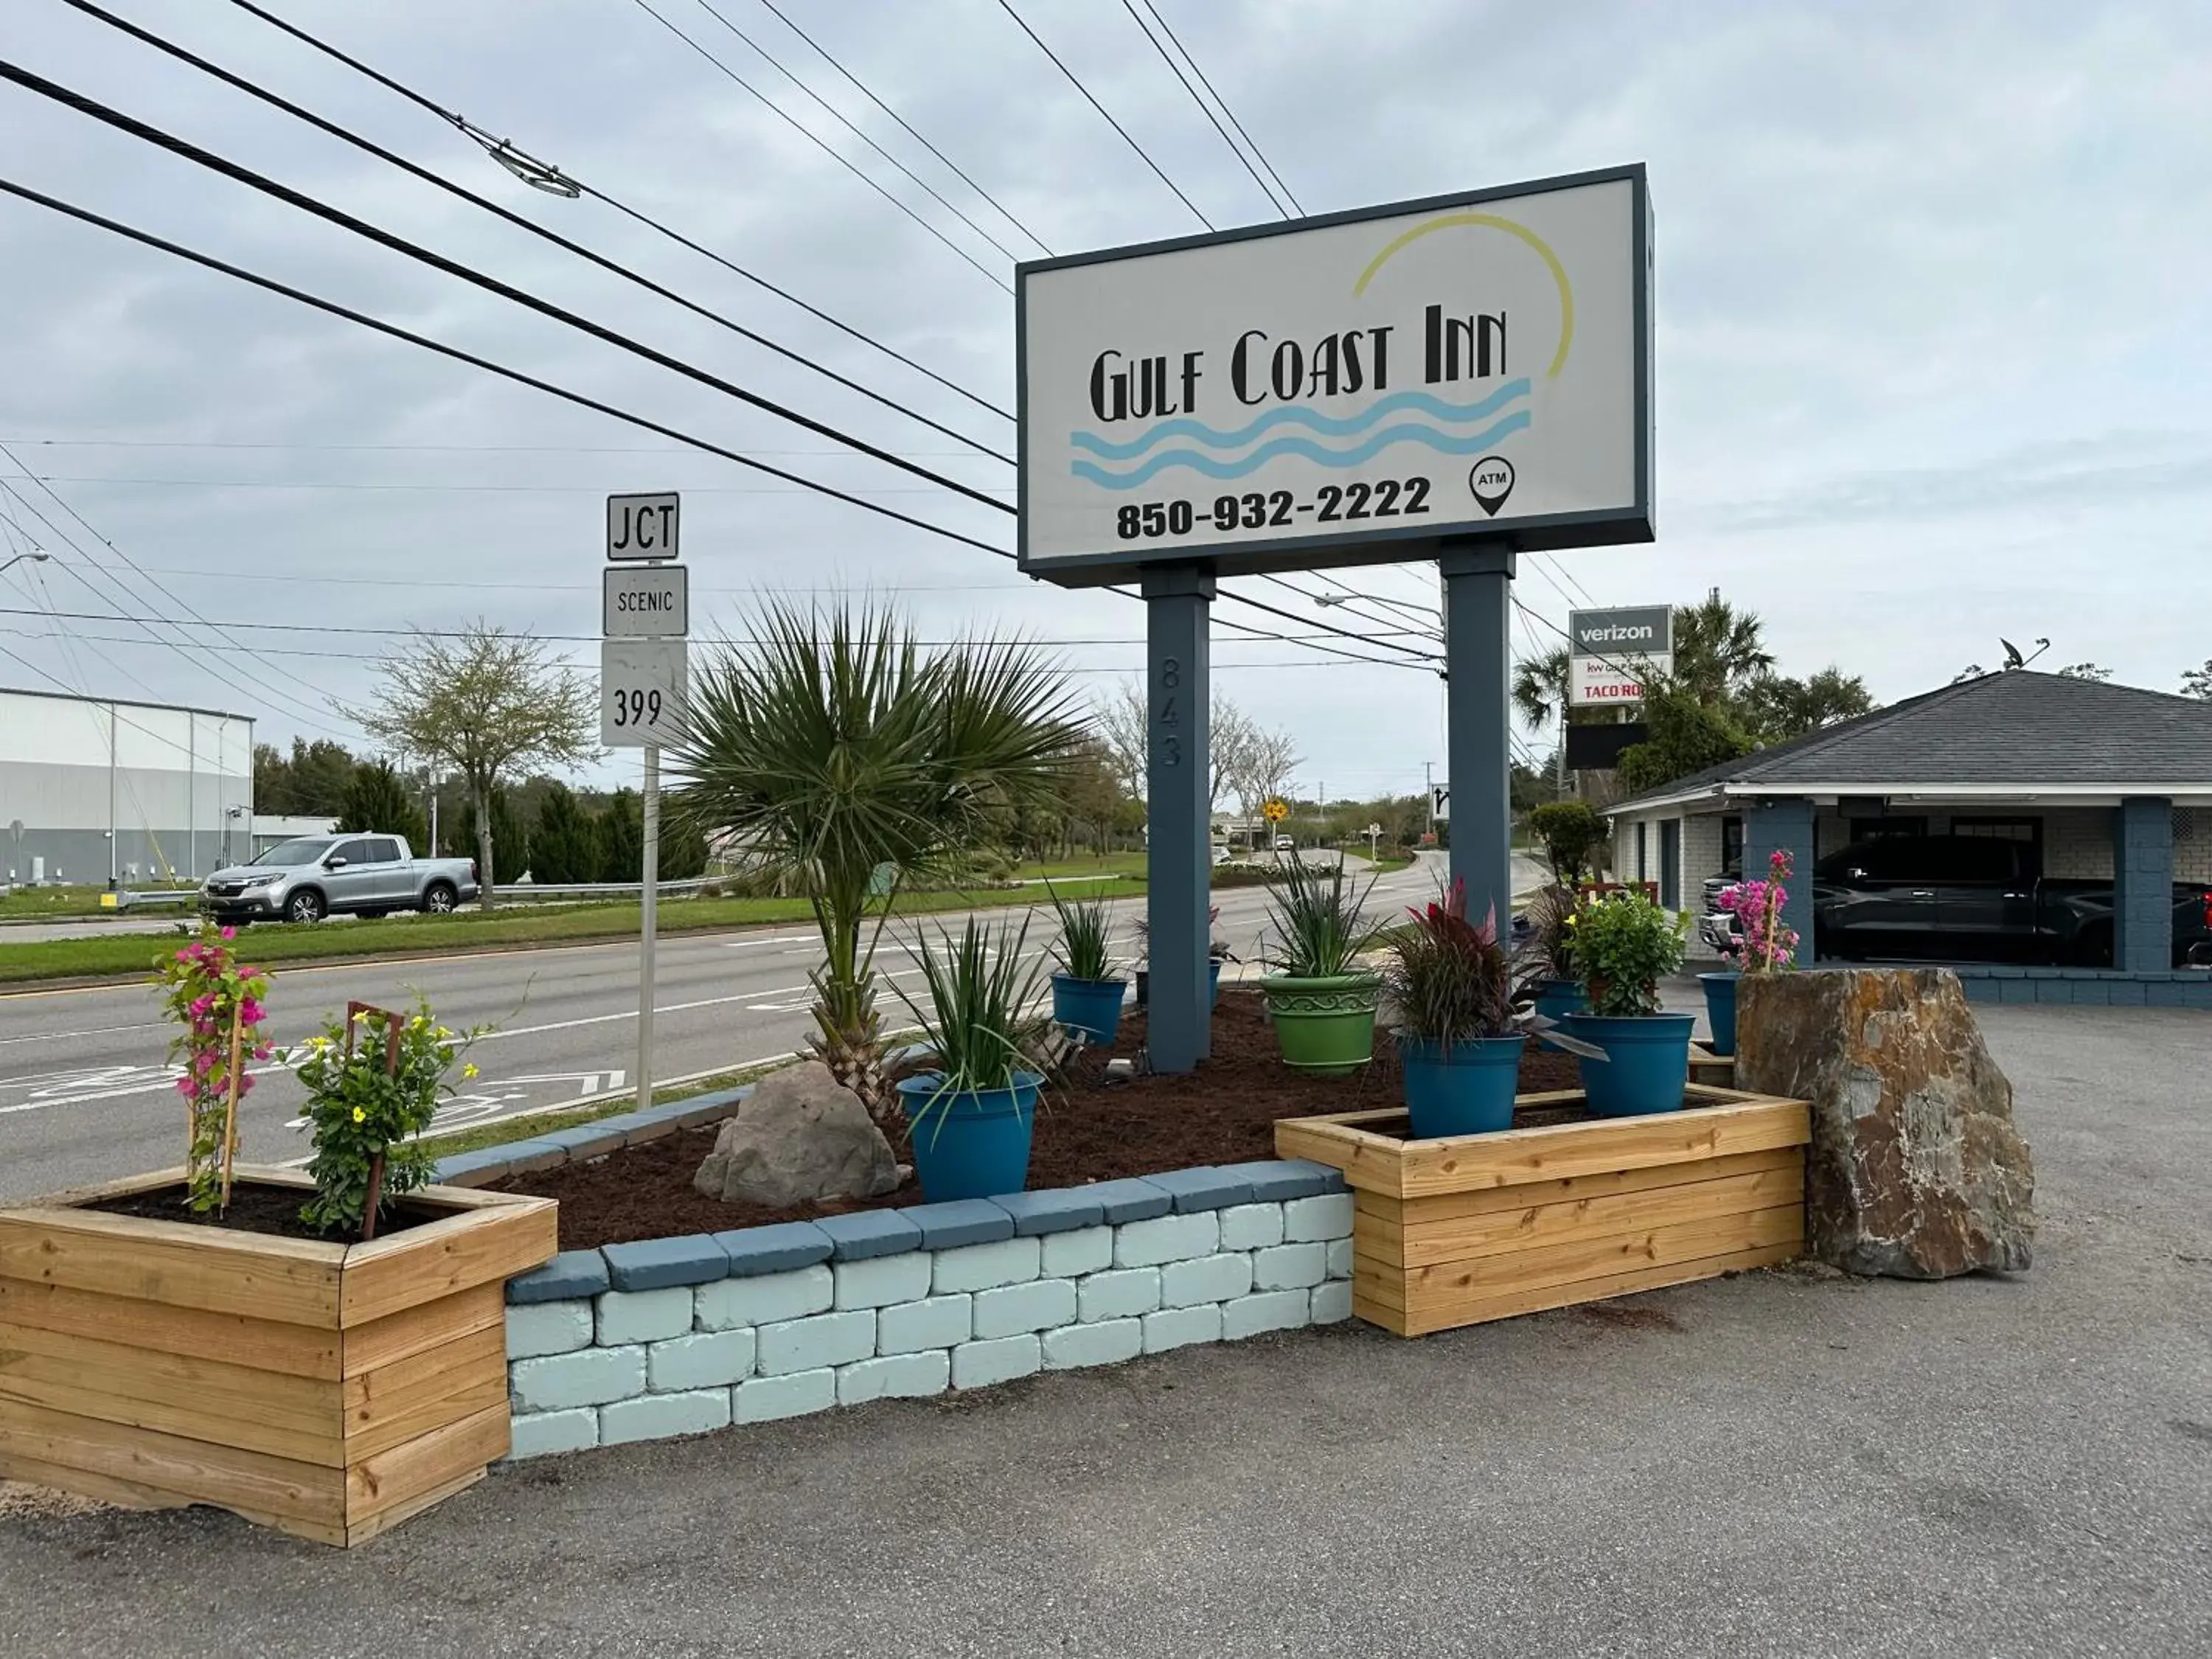 Street view in Gulf Coast Inn